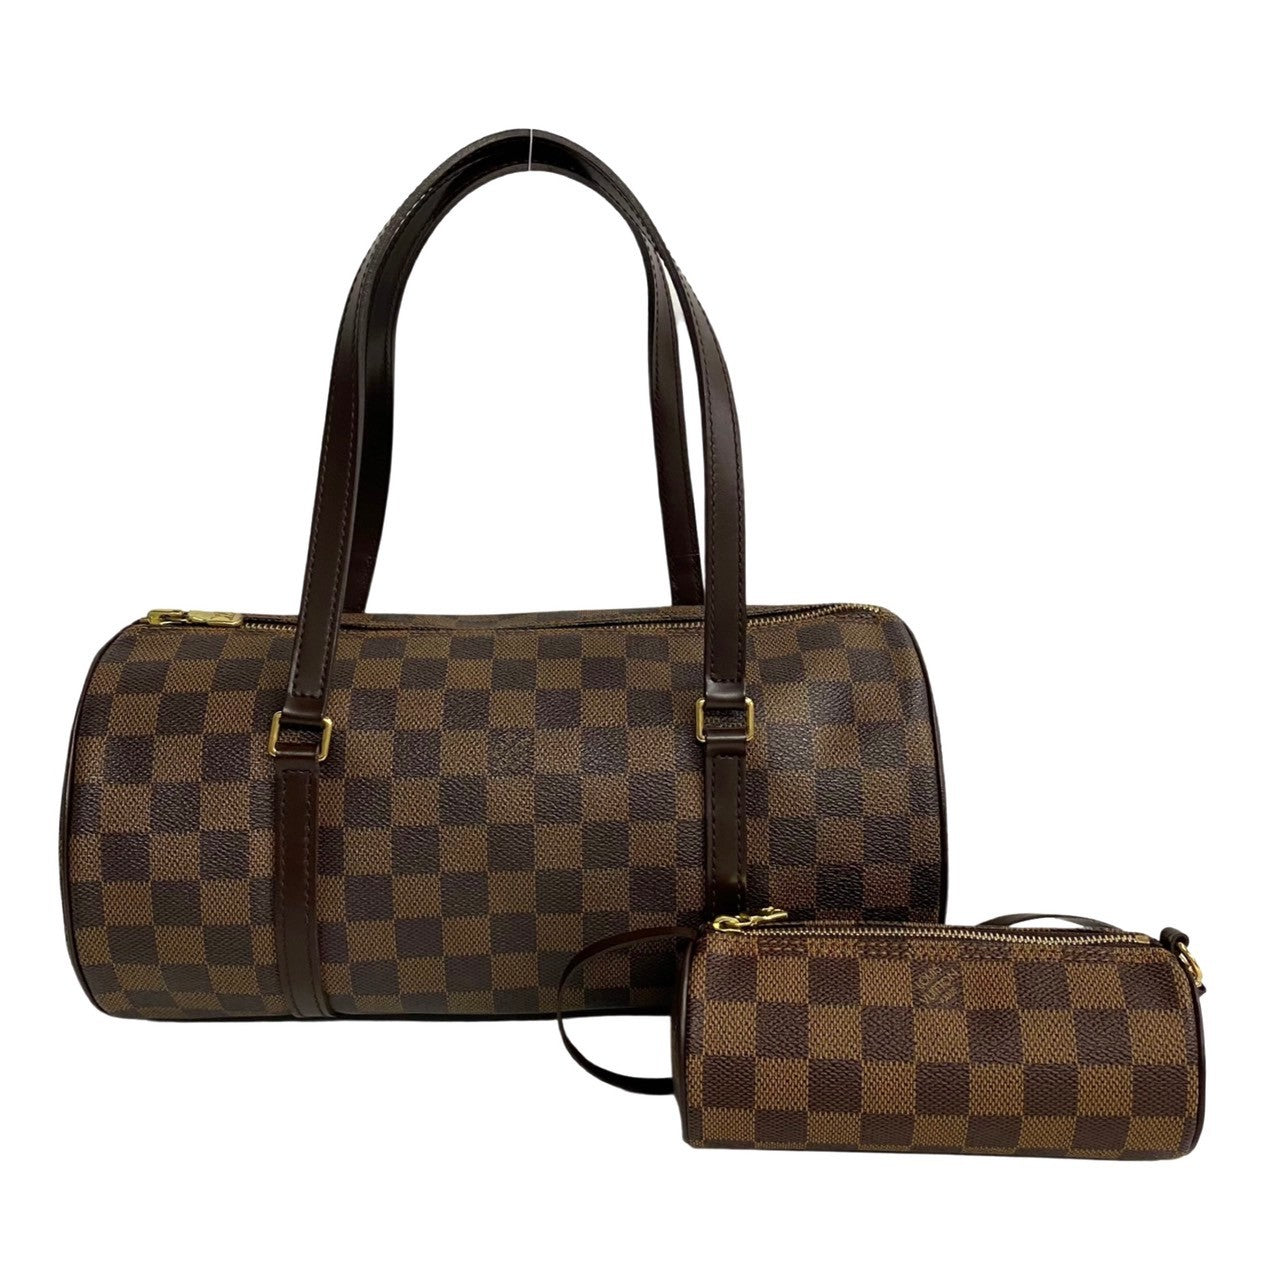 Louis Vuitton Papillon 30 Canvas Handbag N41210 in Excellent condition